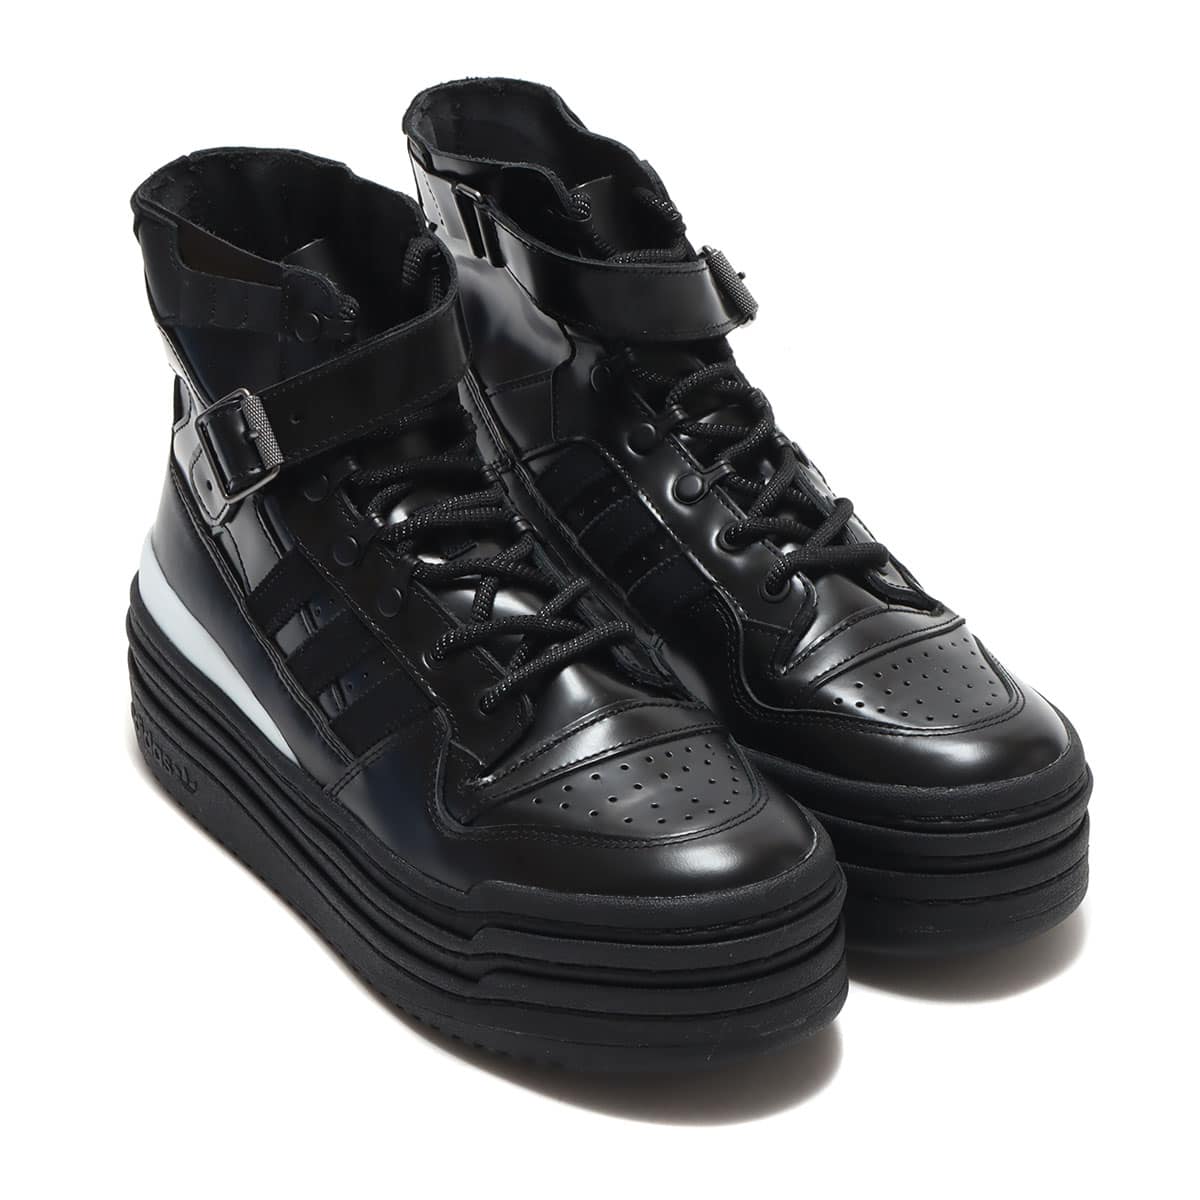 adidas TRIPLE PLATFORUM Hi x AFROPUNK CORE BLACK/CORE BLACK/FOOTWEAR WHITE 21FW-S_photo_large